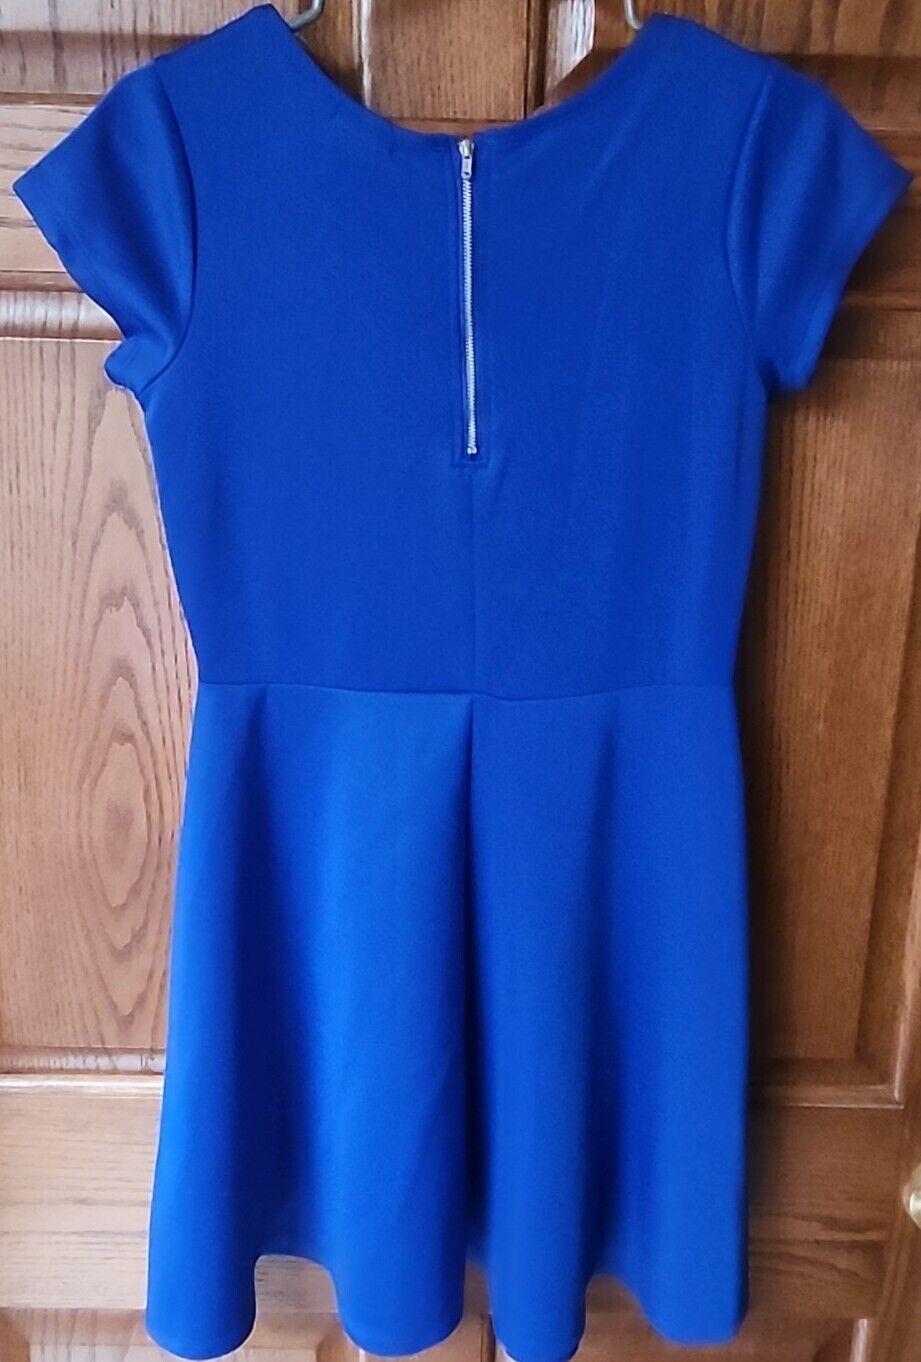 Rue 21 Dark Royal Blue Dress Size Juniors Medium … - image 3